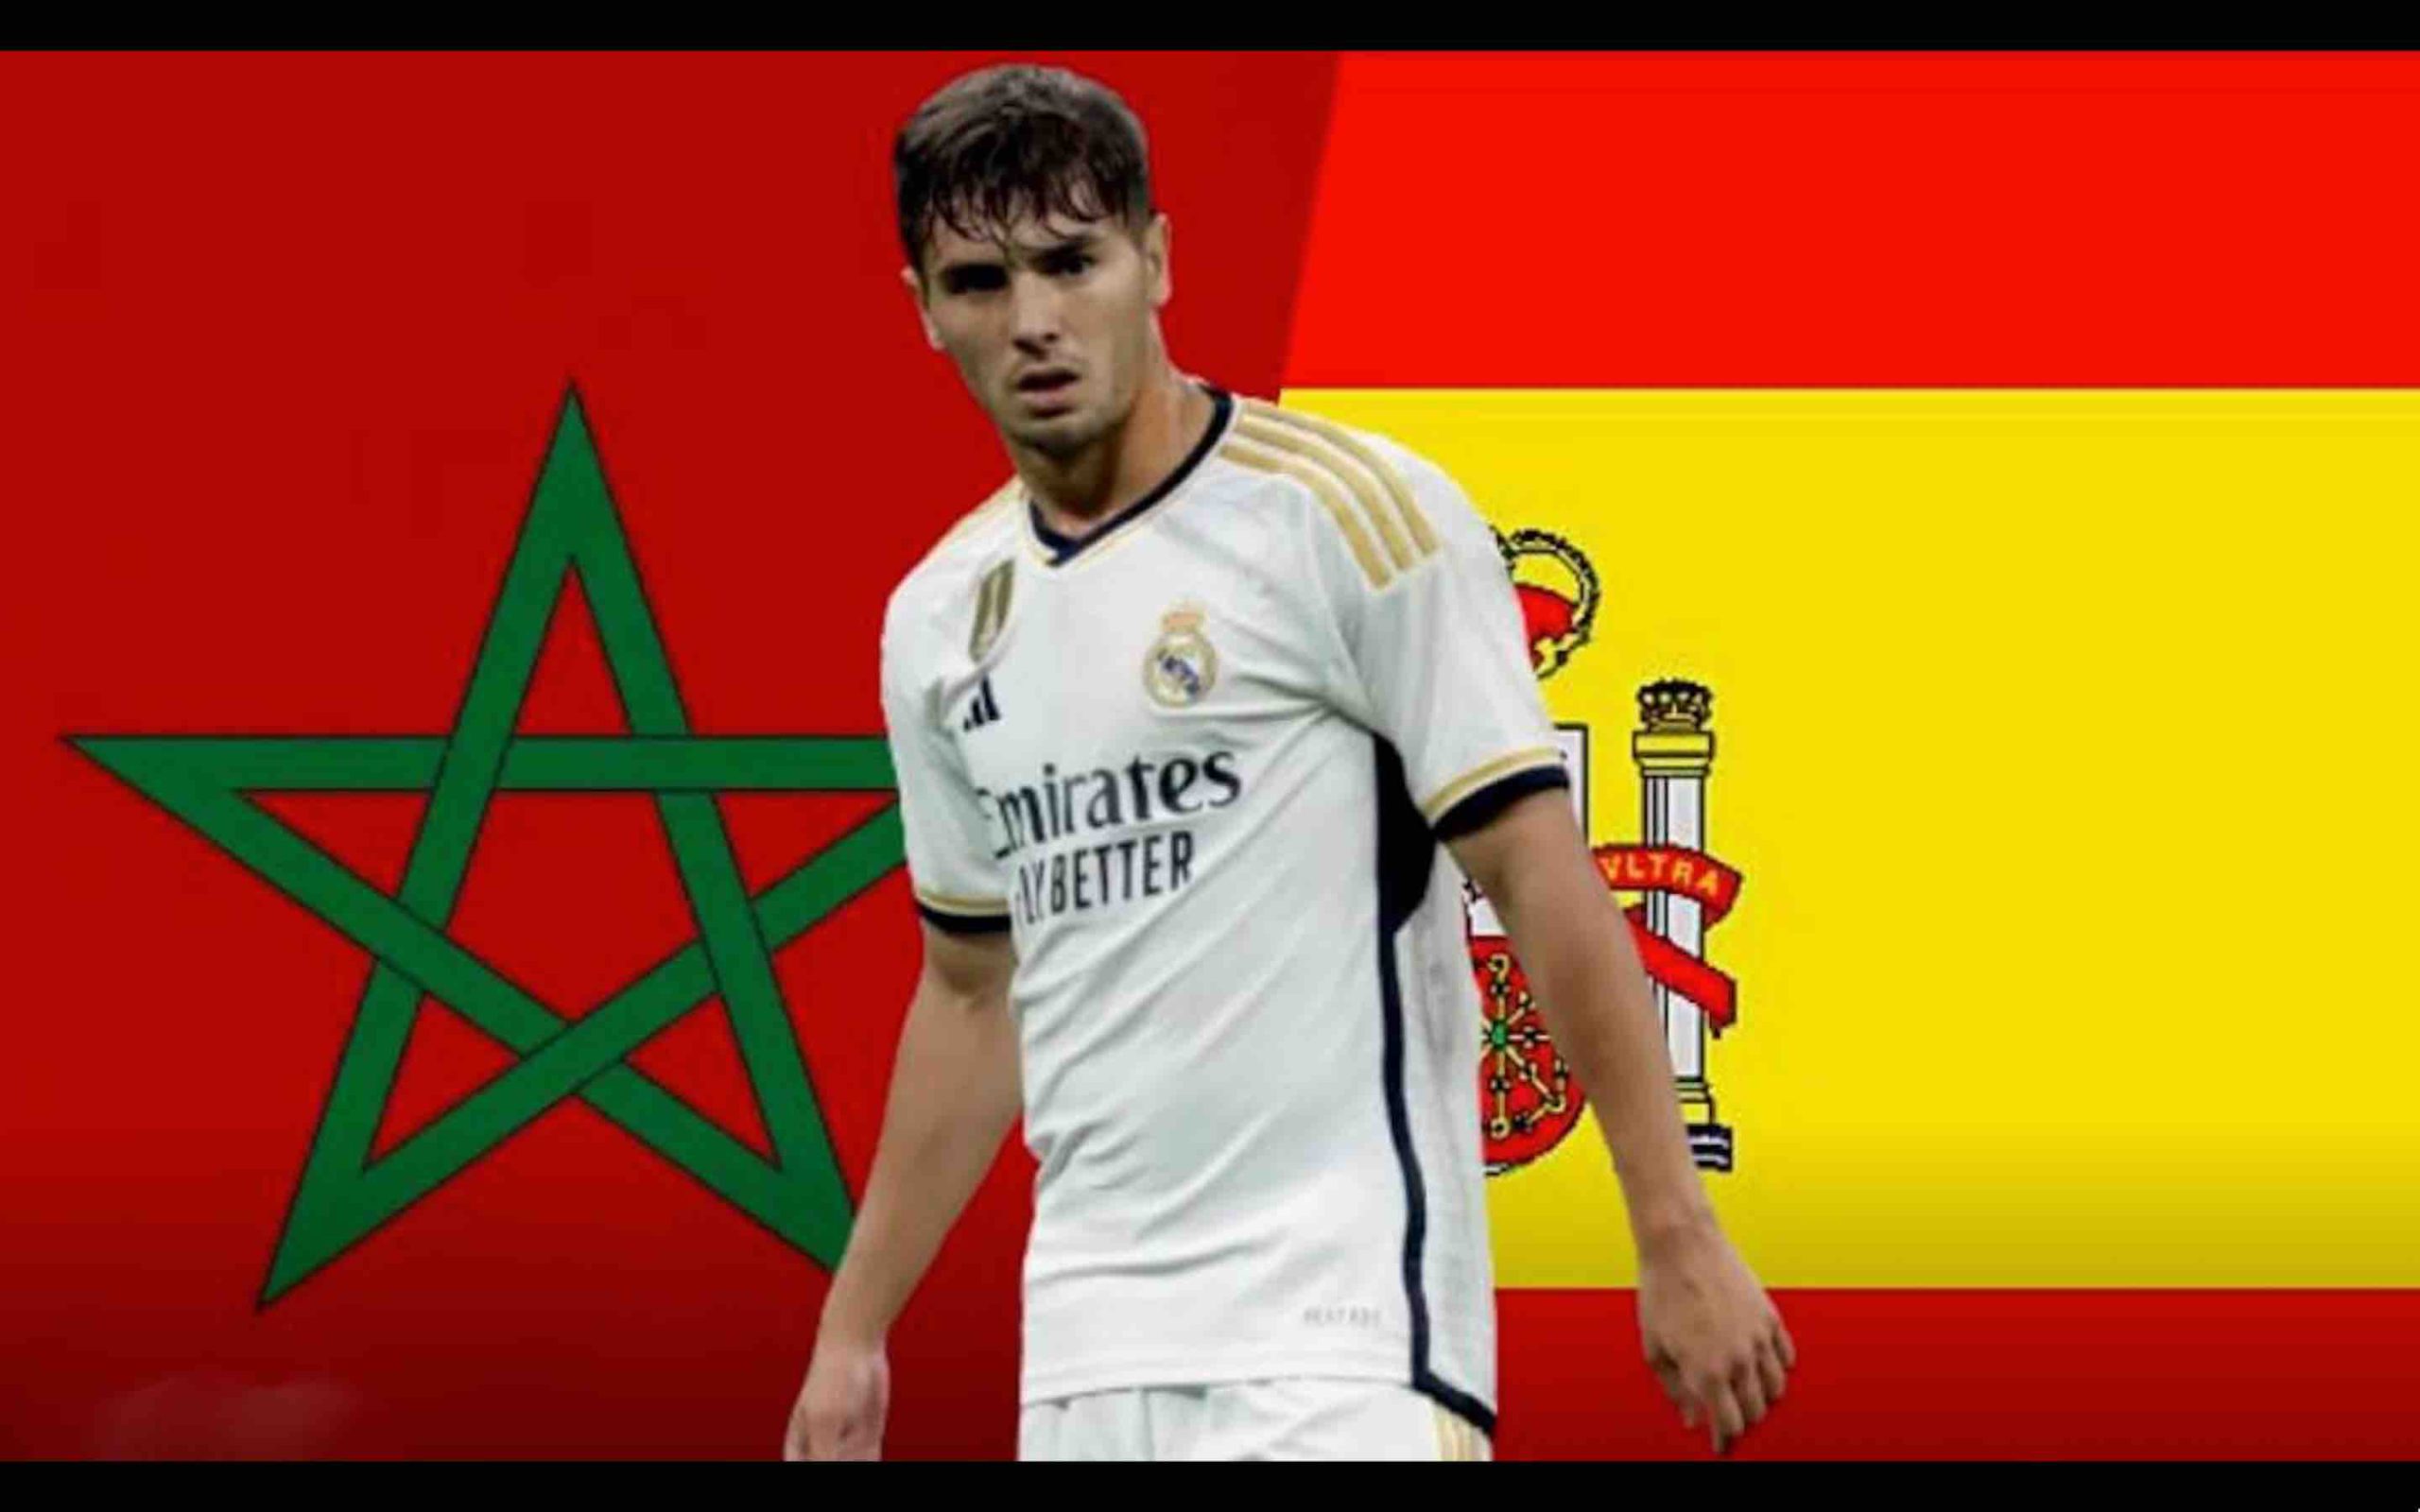 Brahim Abdelkader Díaz Maroc Espagne Morocco Spain